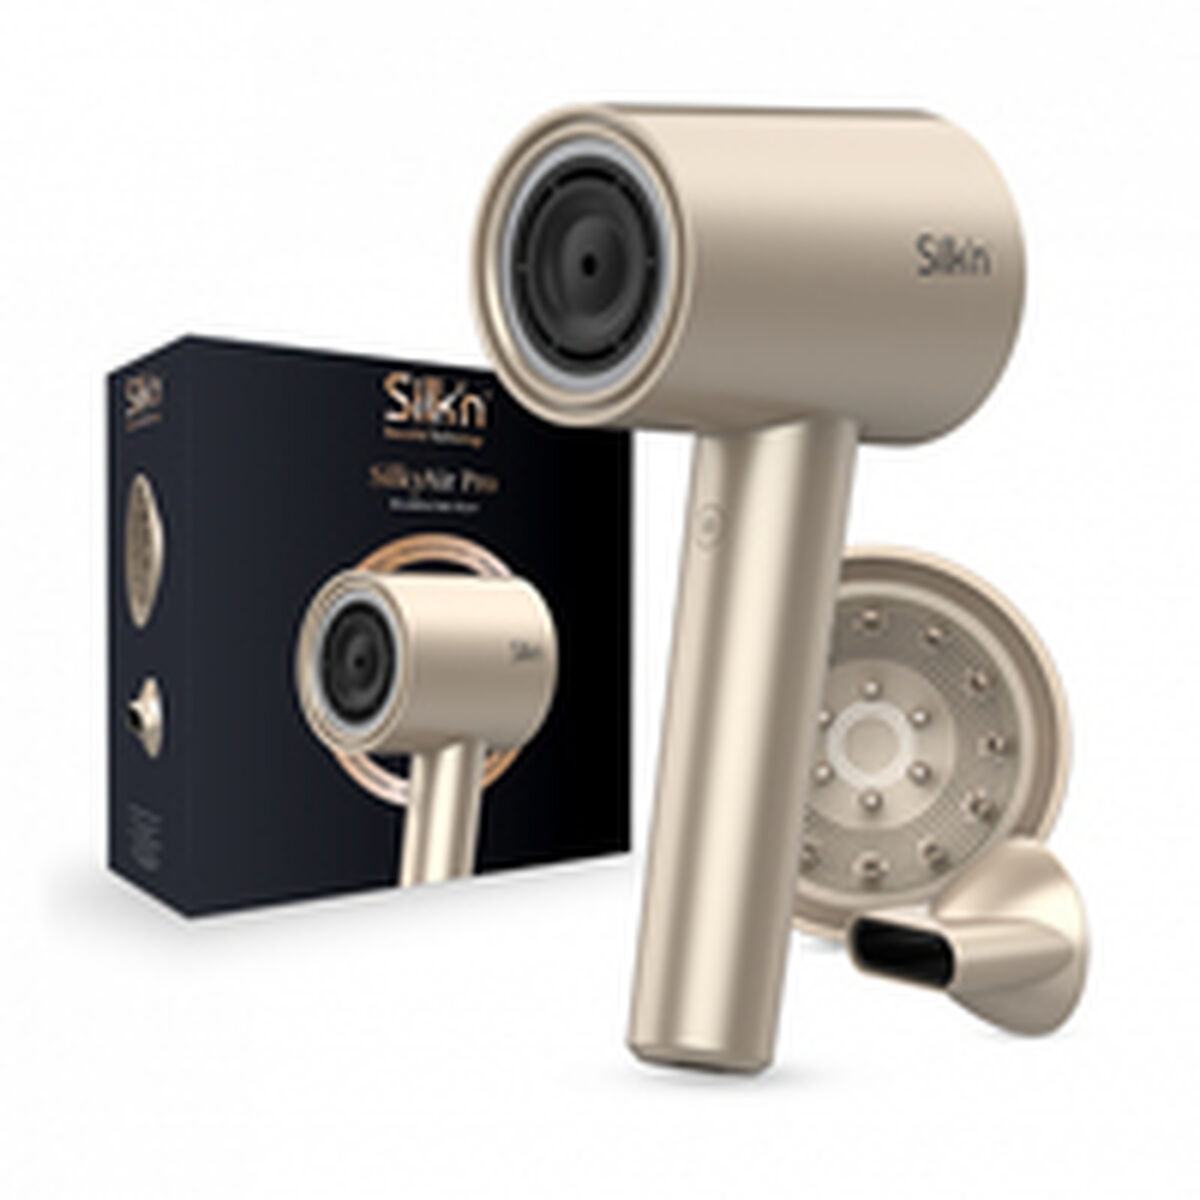 Kaufe Silk'n SilkyAir Pro Gold 1600 W Fön bei AWK Flagship um € 307.00